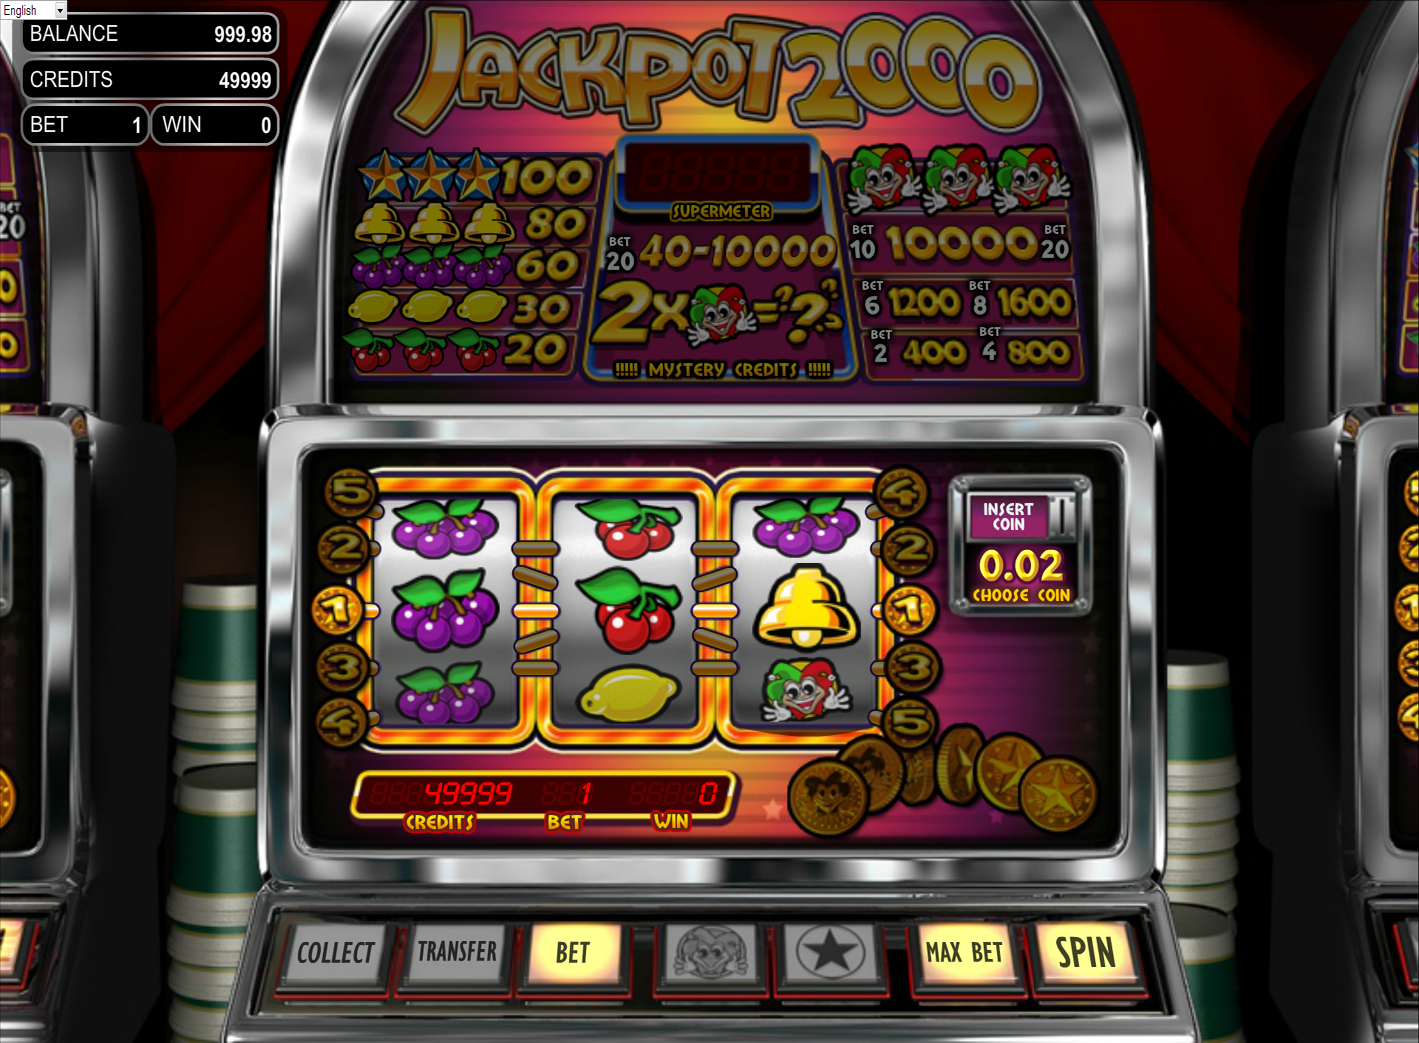 Jackpot 2000 (Jackpot 2000) from category Slots